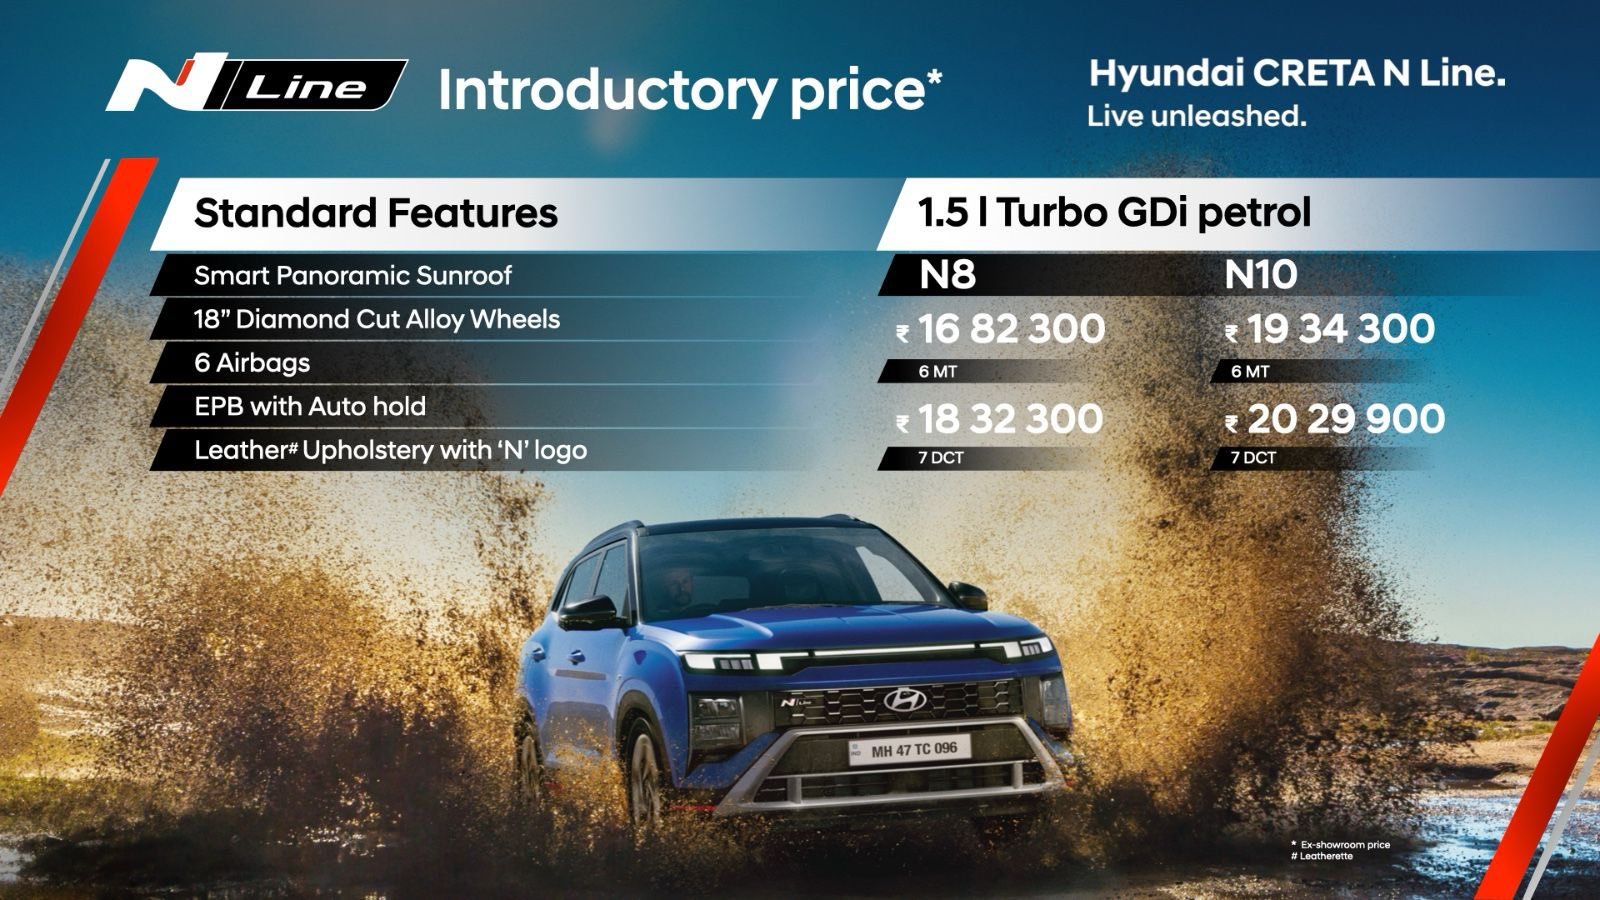 Hyundai Creta N Line Price and features